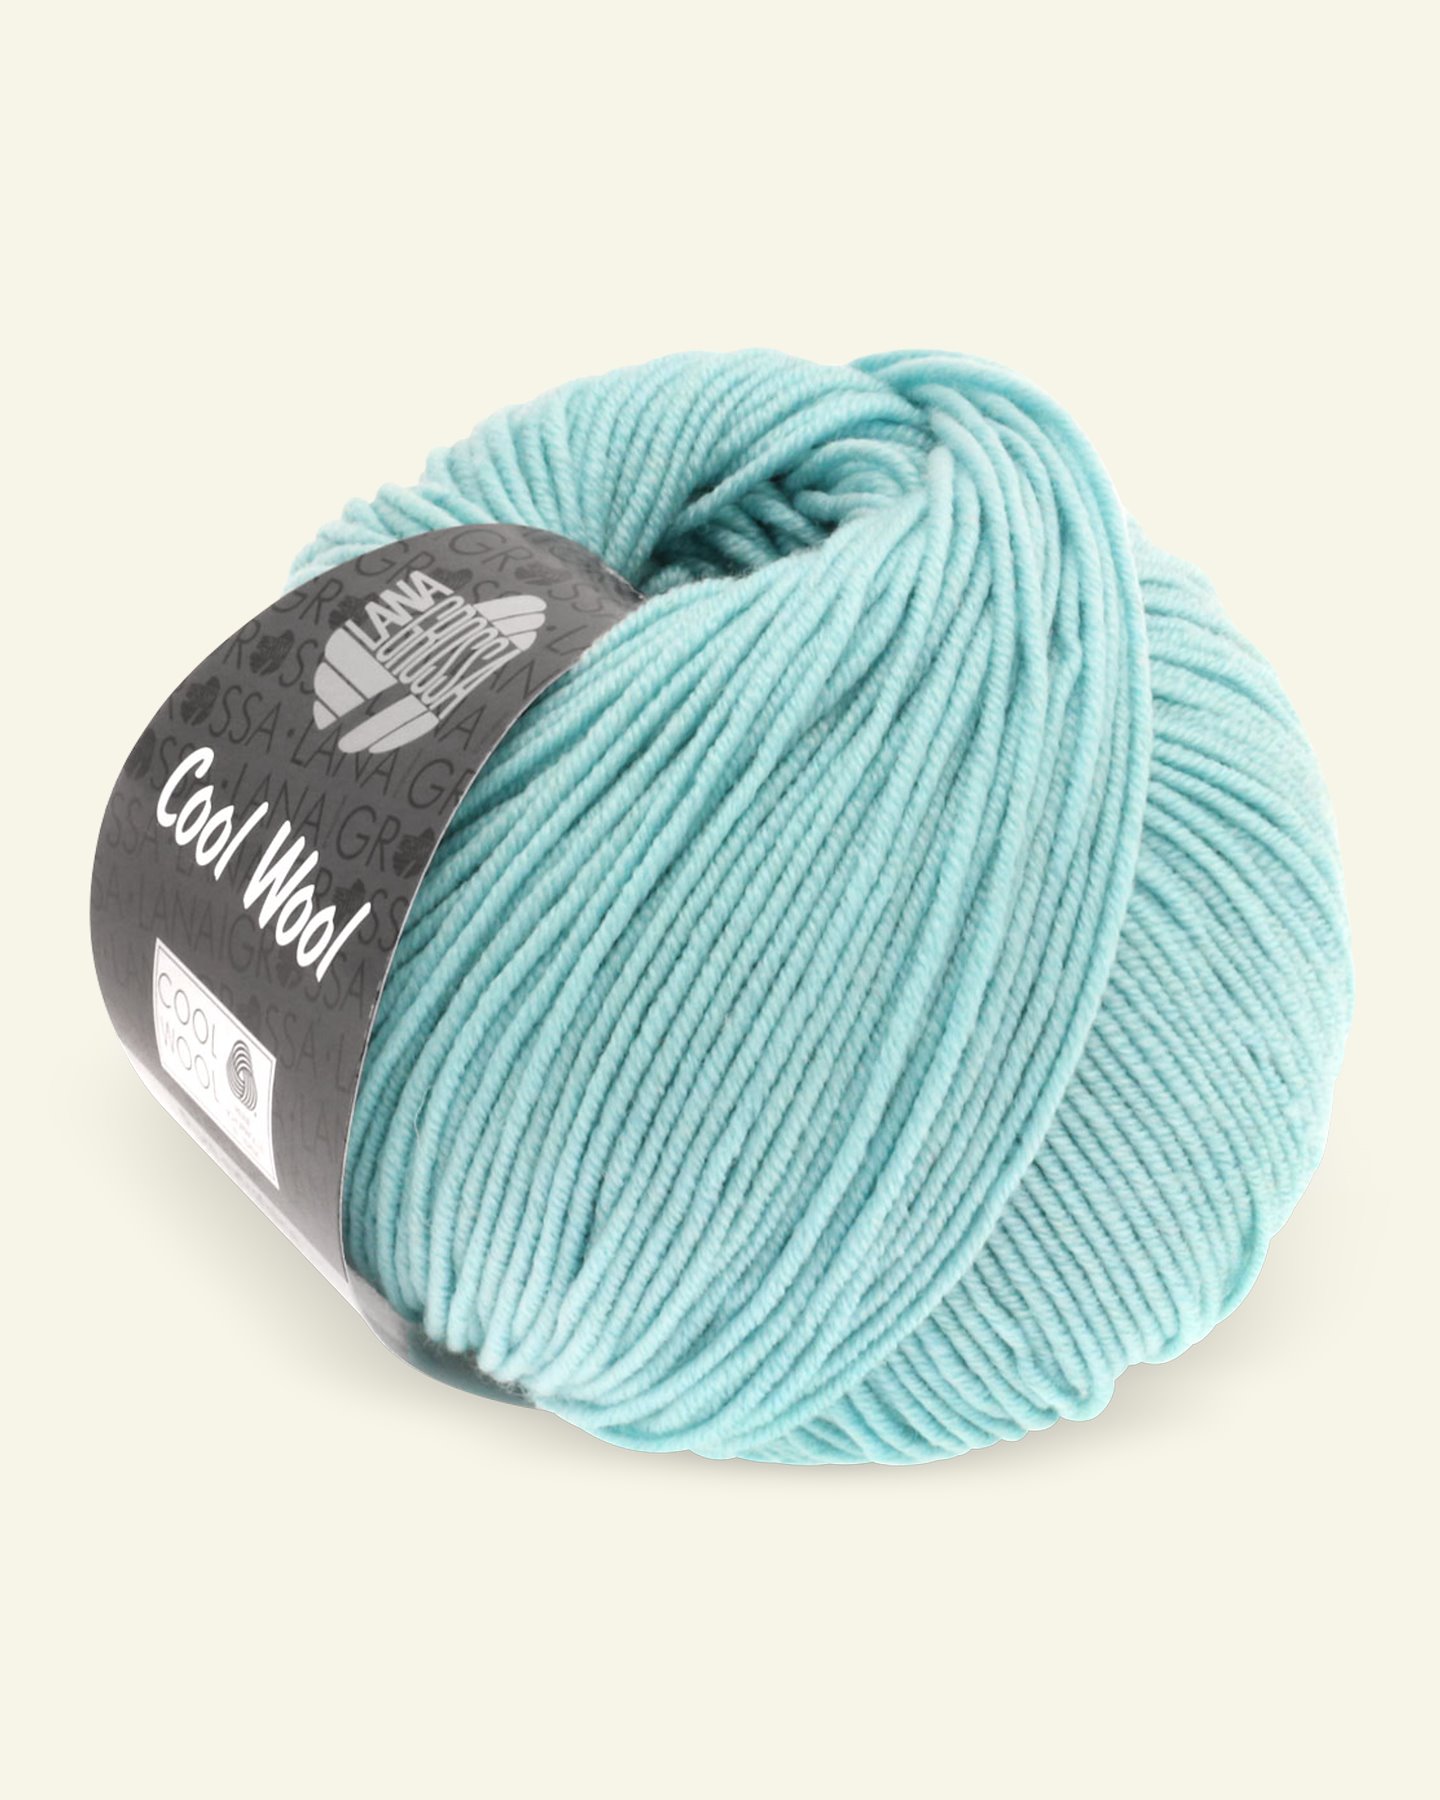 Lana Grossa, extrafine merino wool yarn "Cool Wool", turquoise 90001125_pack